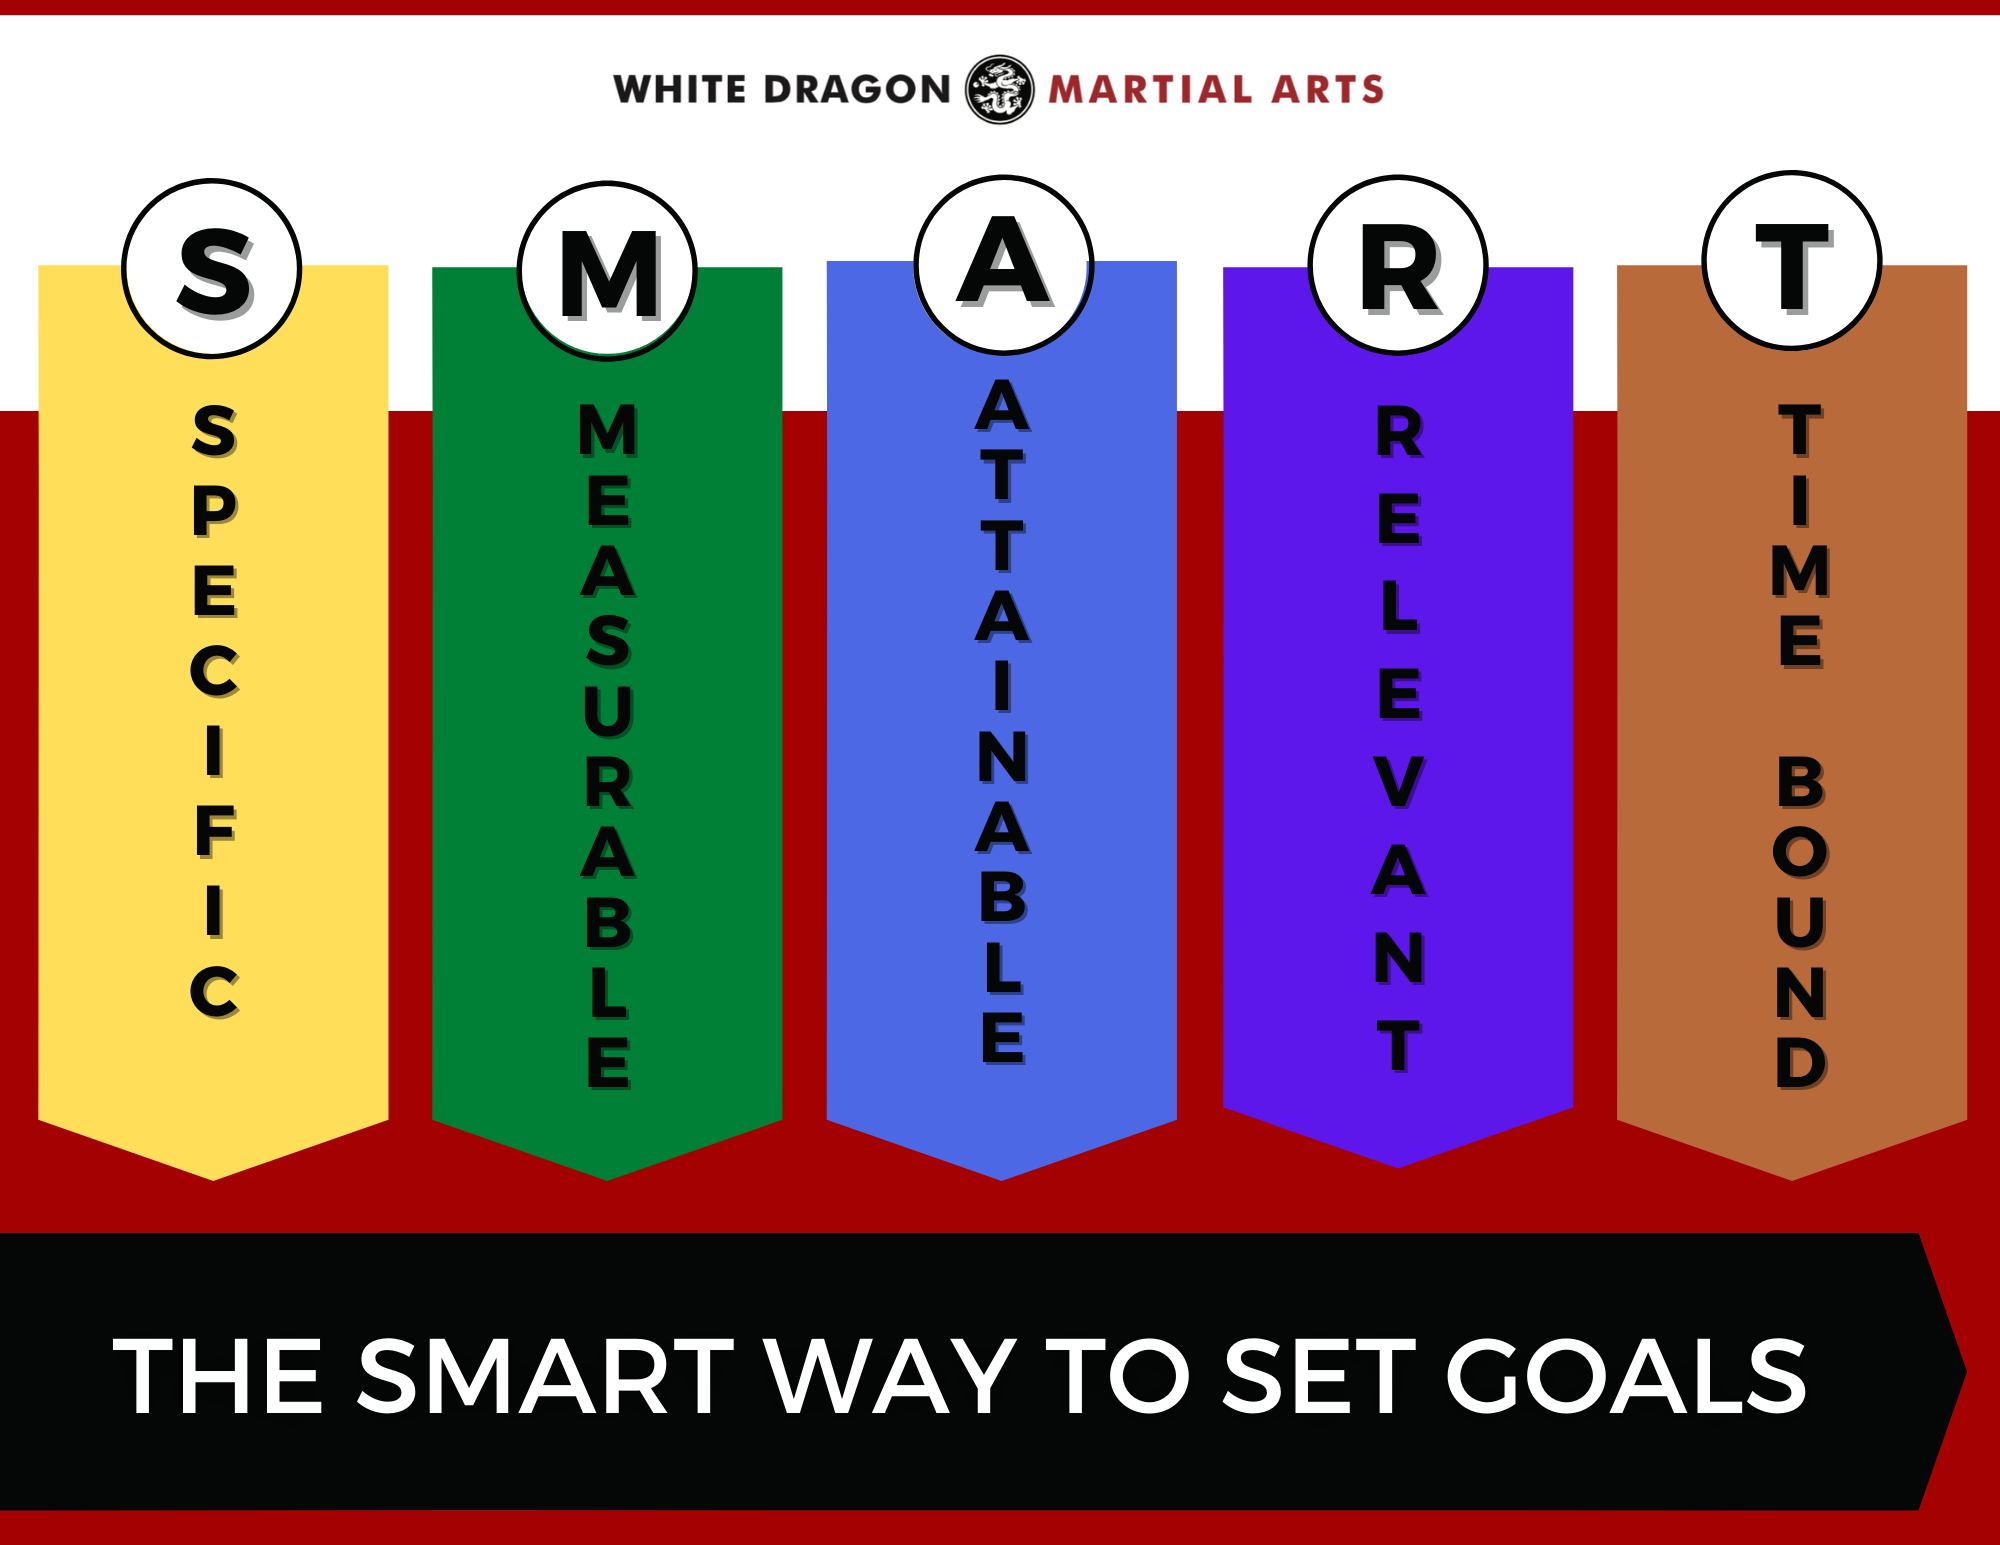 White Dragon Martial Arts Smart Goals